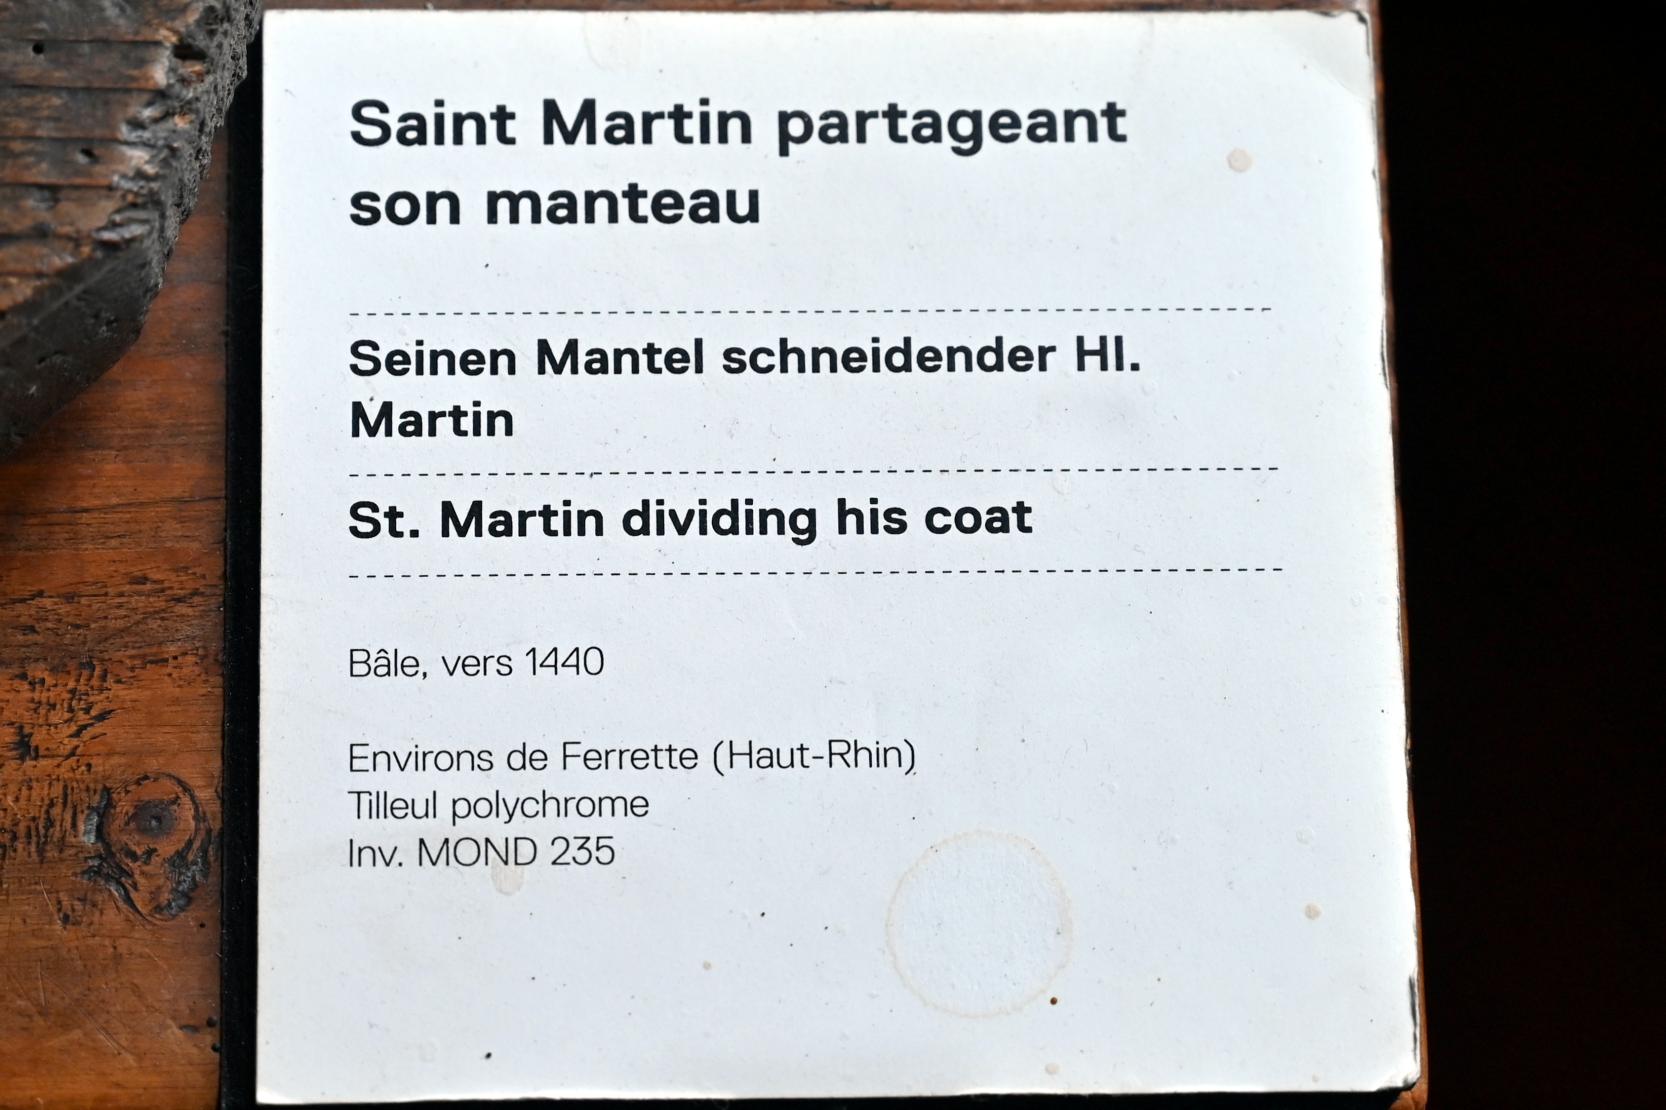 Mantelteilung des hl. Martin, Straßburg, Musée de l’Œuvre Notre-Dame (Frauenhausmuseum), um 1440, Bild 2/2